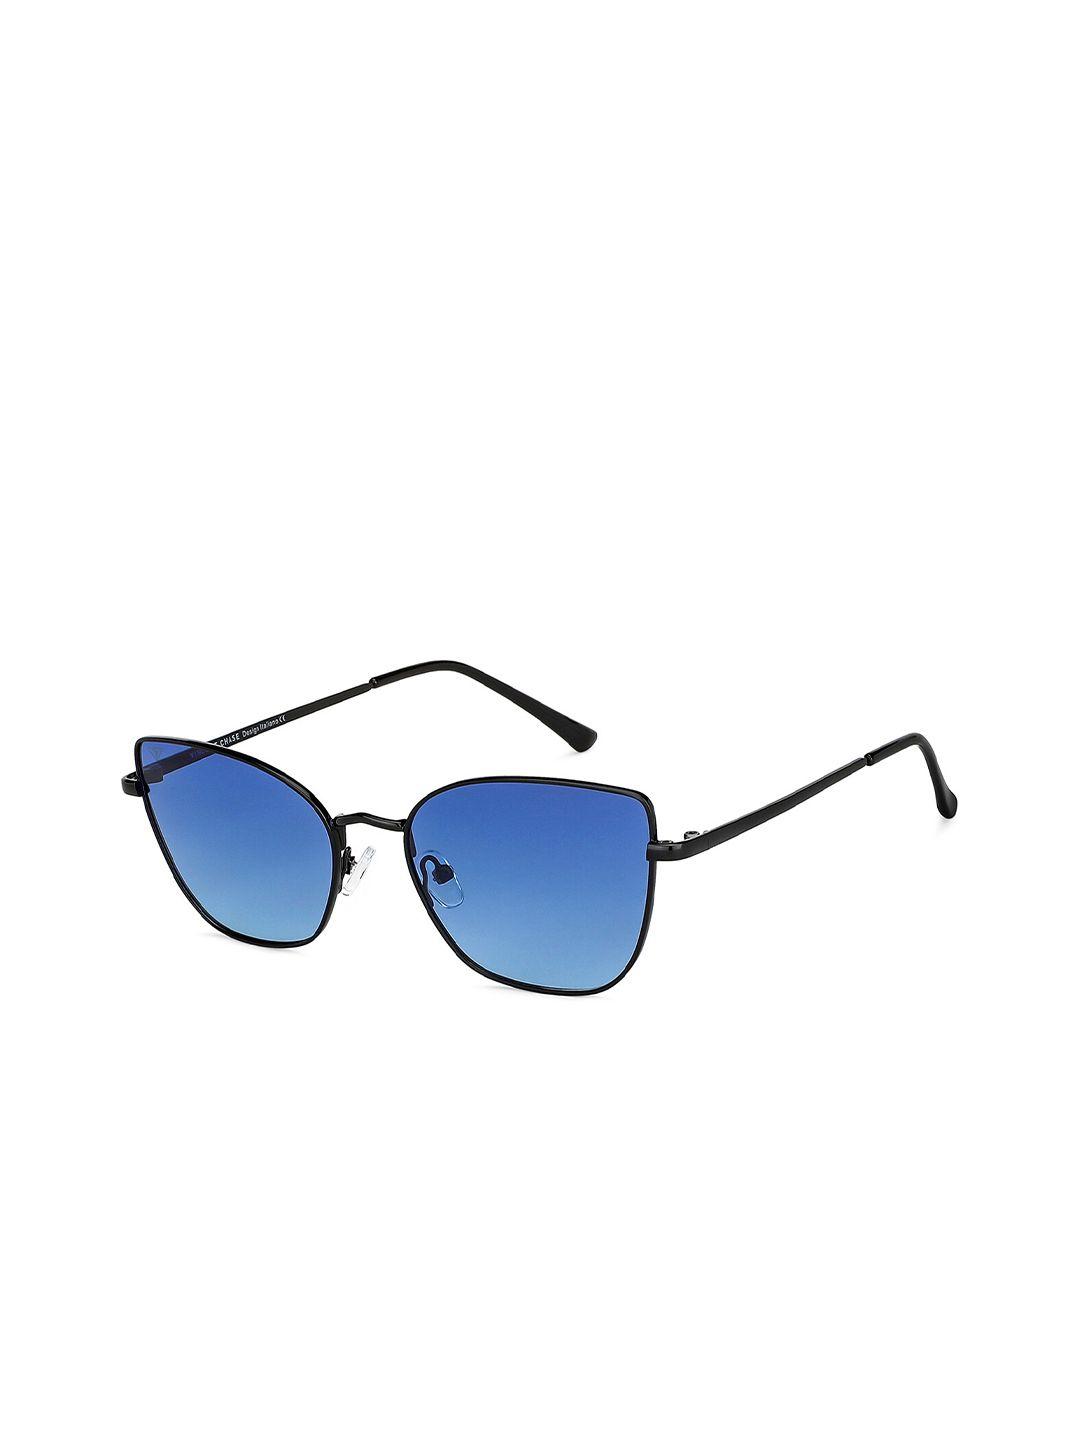 vincent chase unisex blue lens & black cateye sunglasses with polarised lens